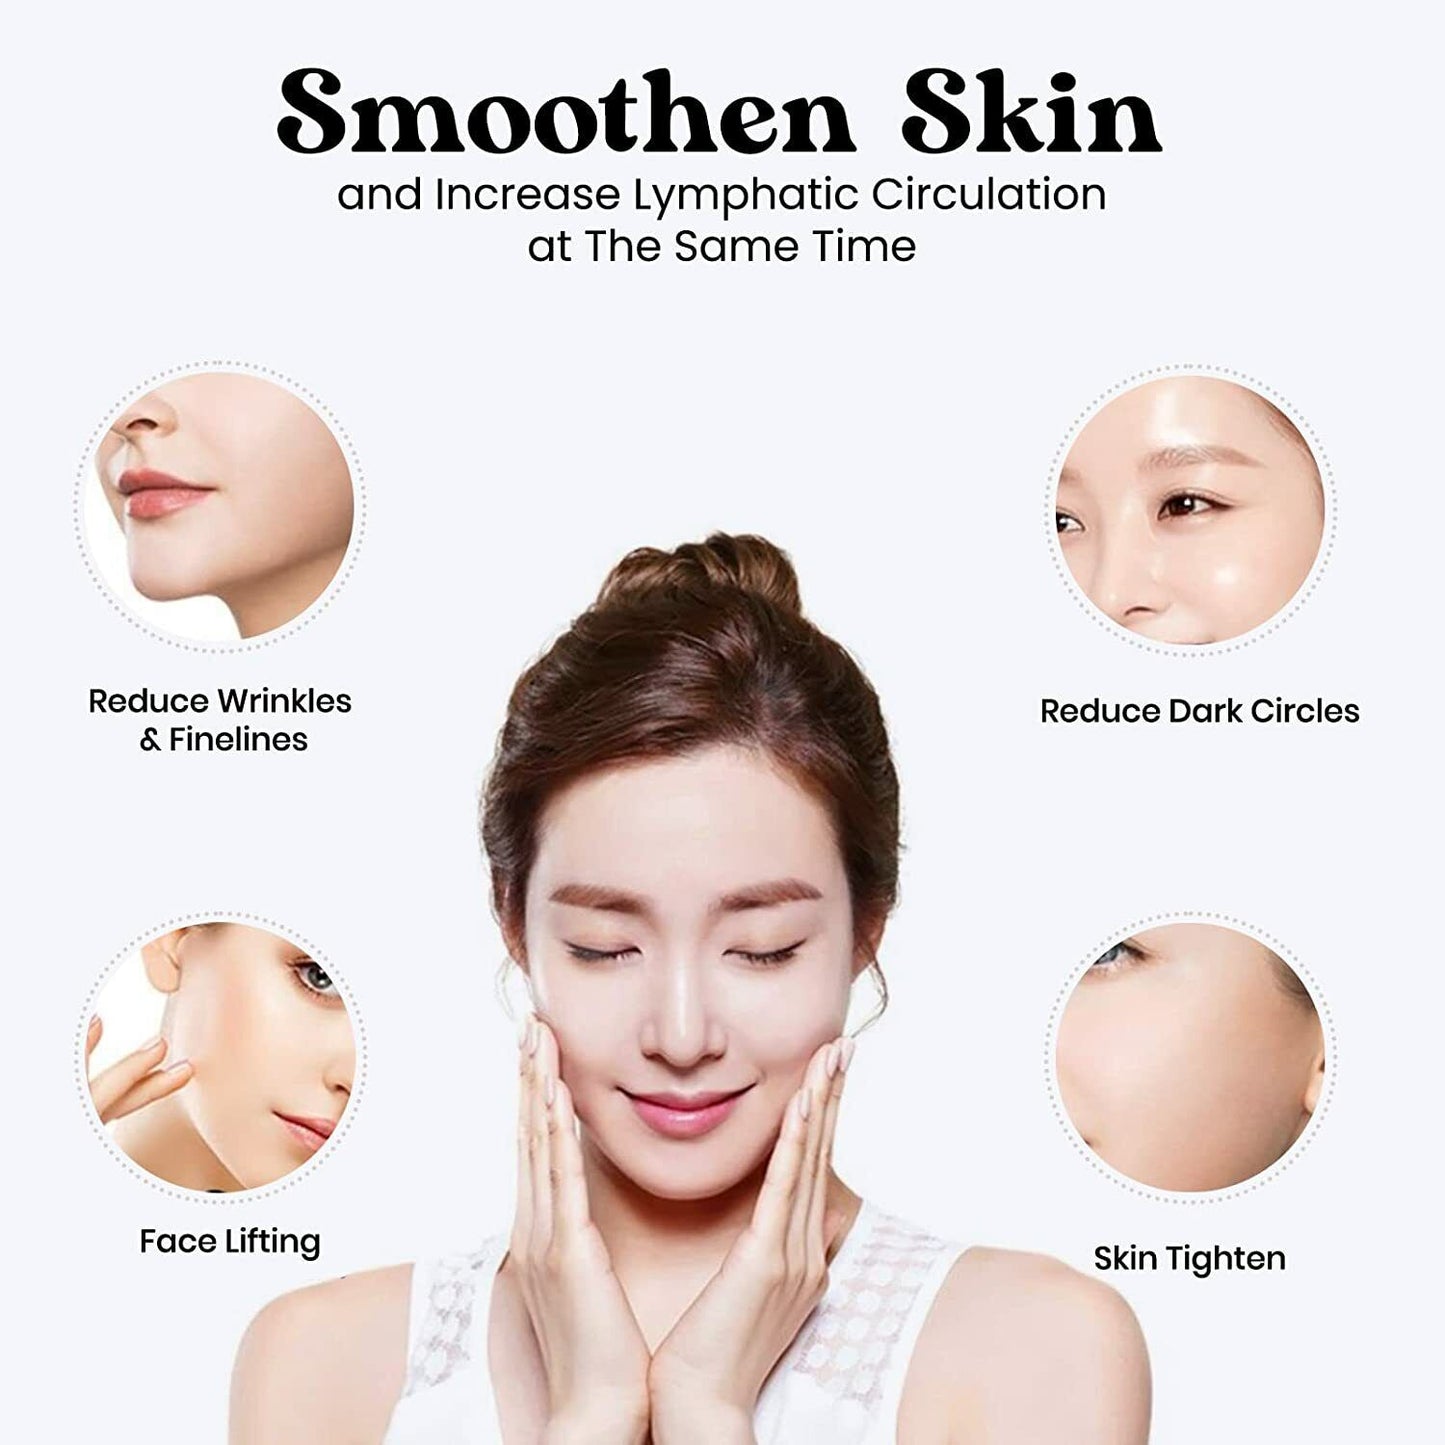 Jade Roller Gua Sha Facial Tools Set - Beauty Skin Care Face Roller Massager NEW